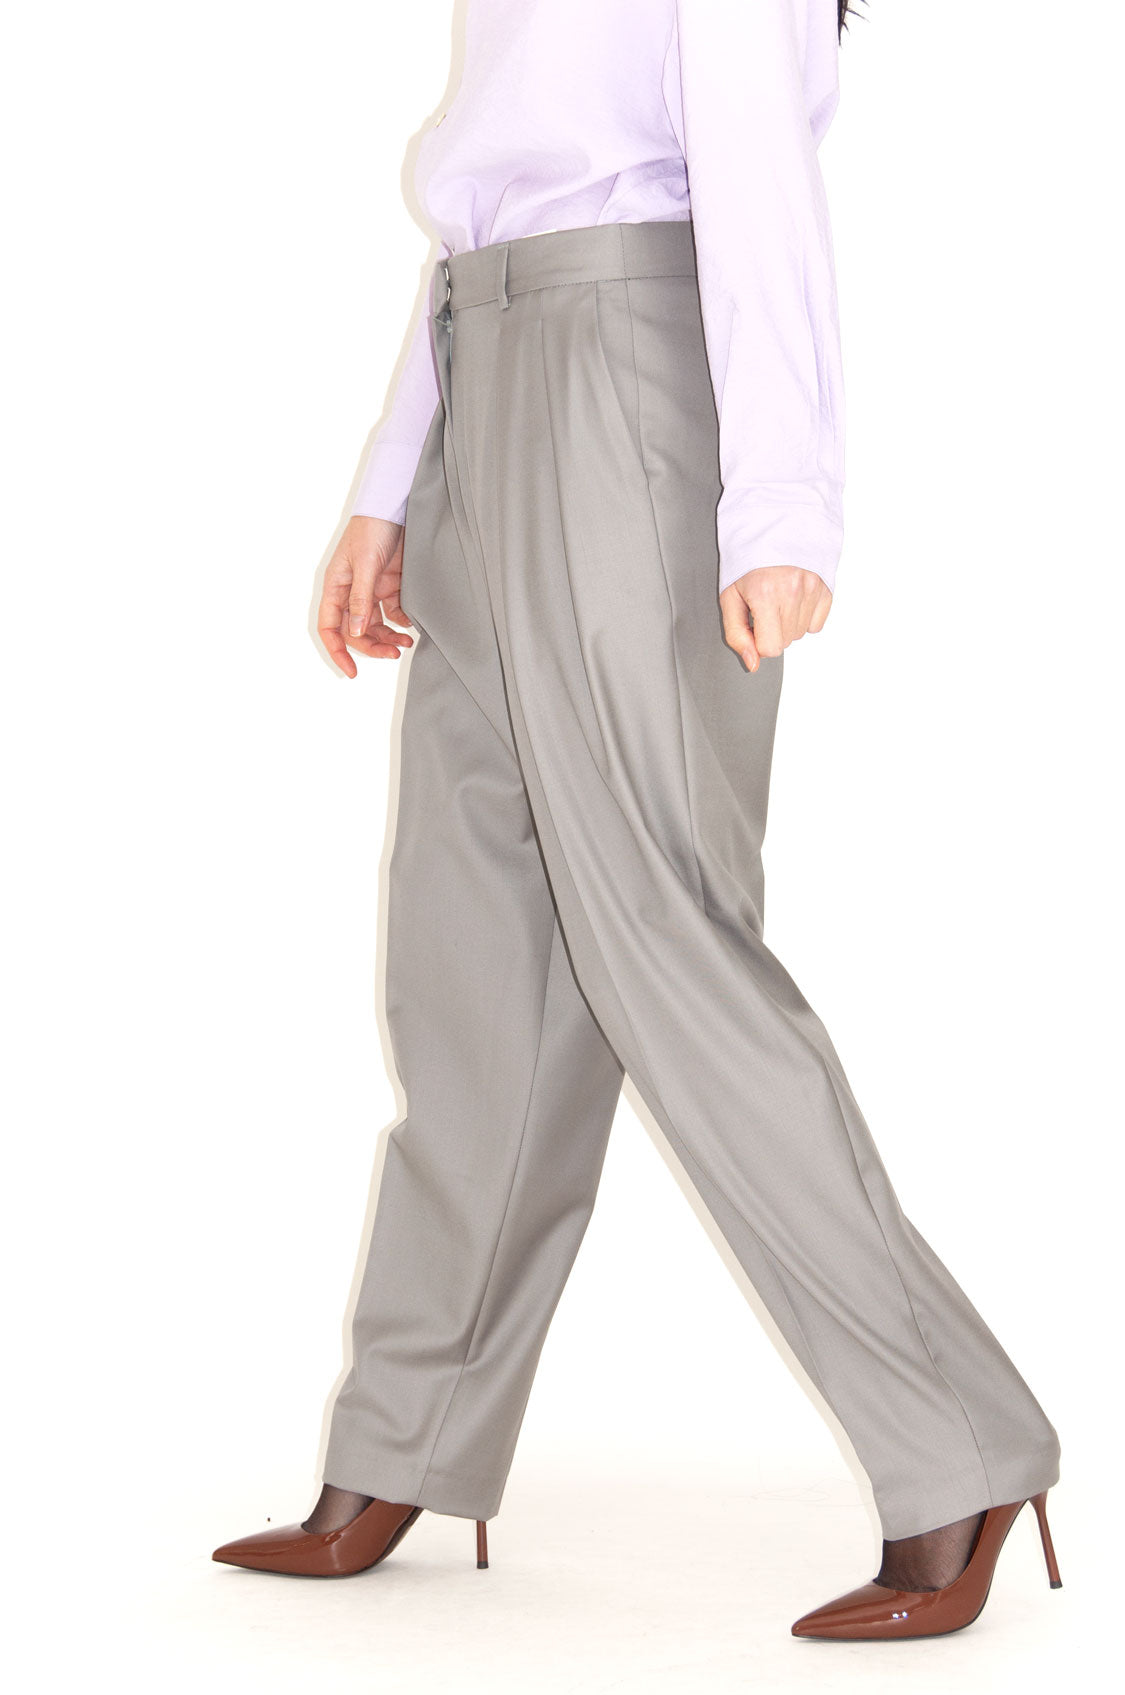 Pantalone pippa grey